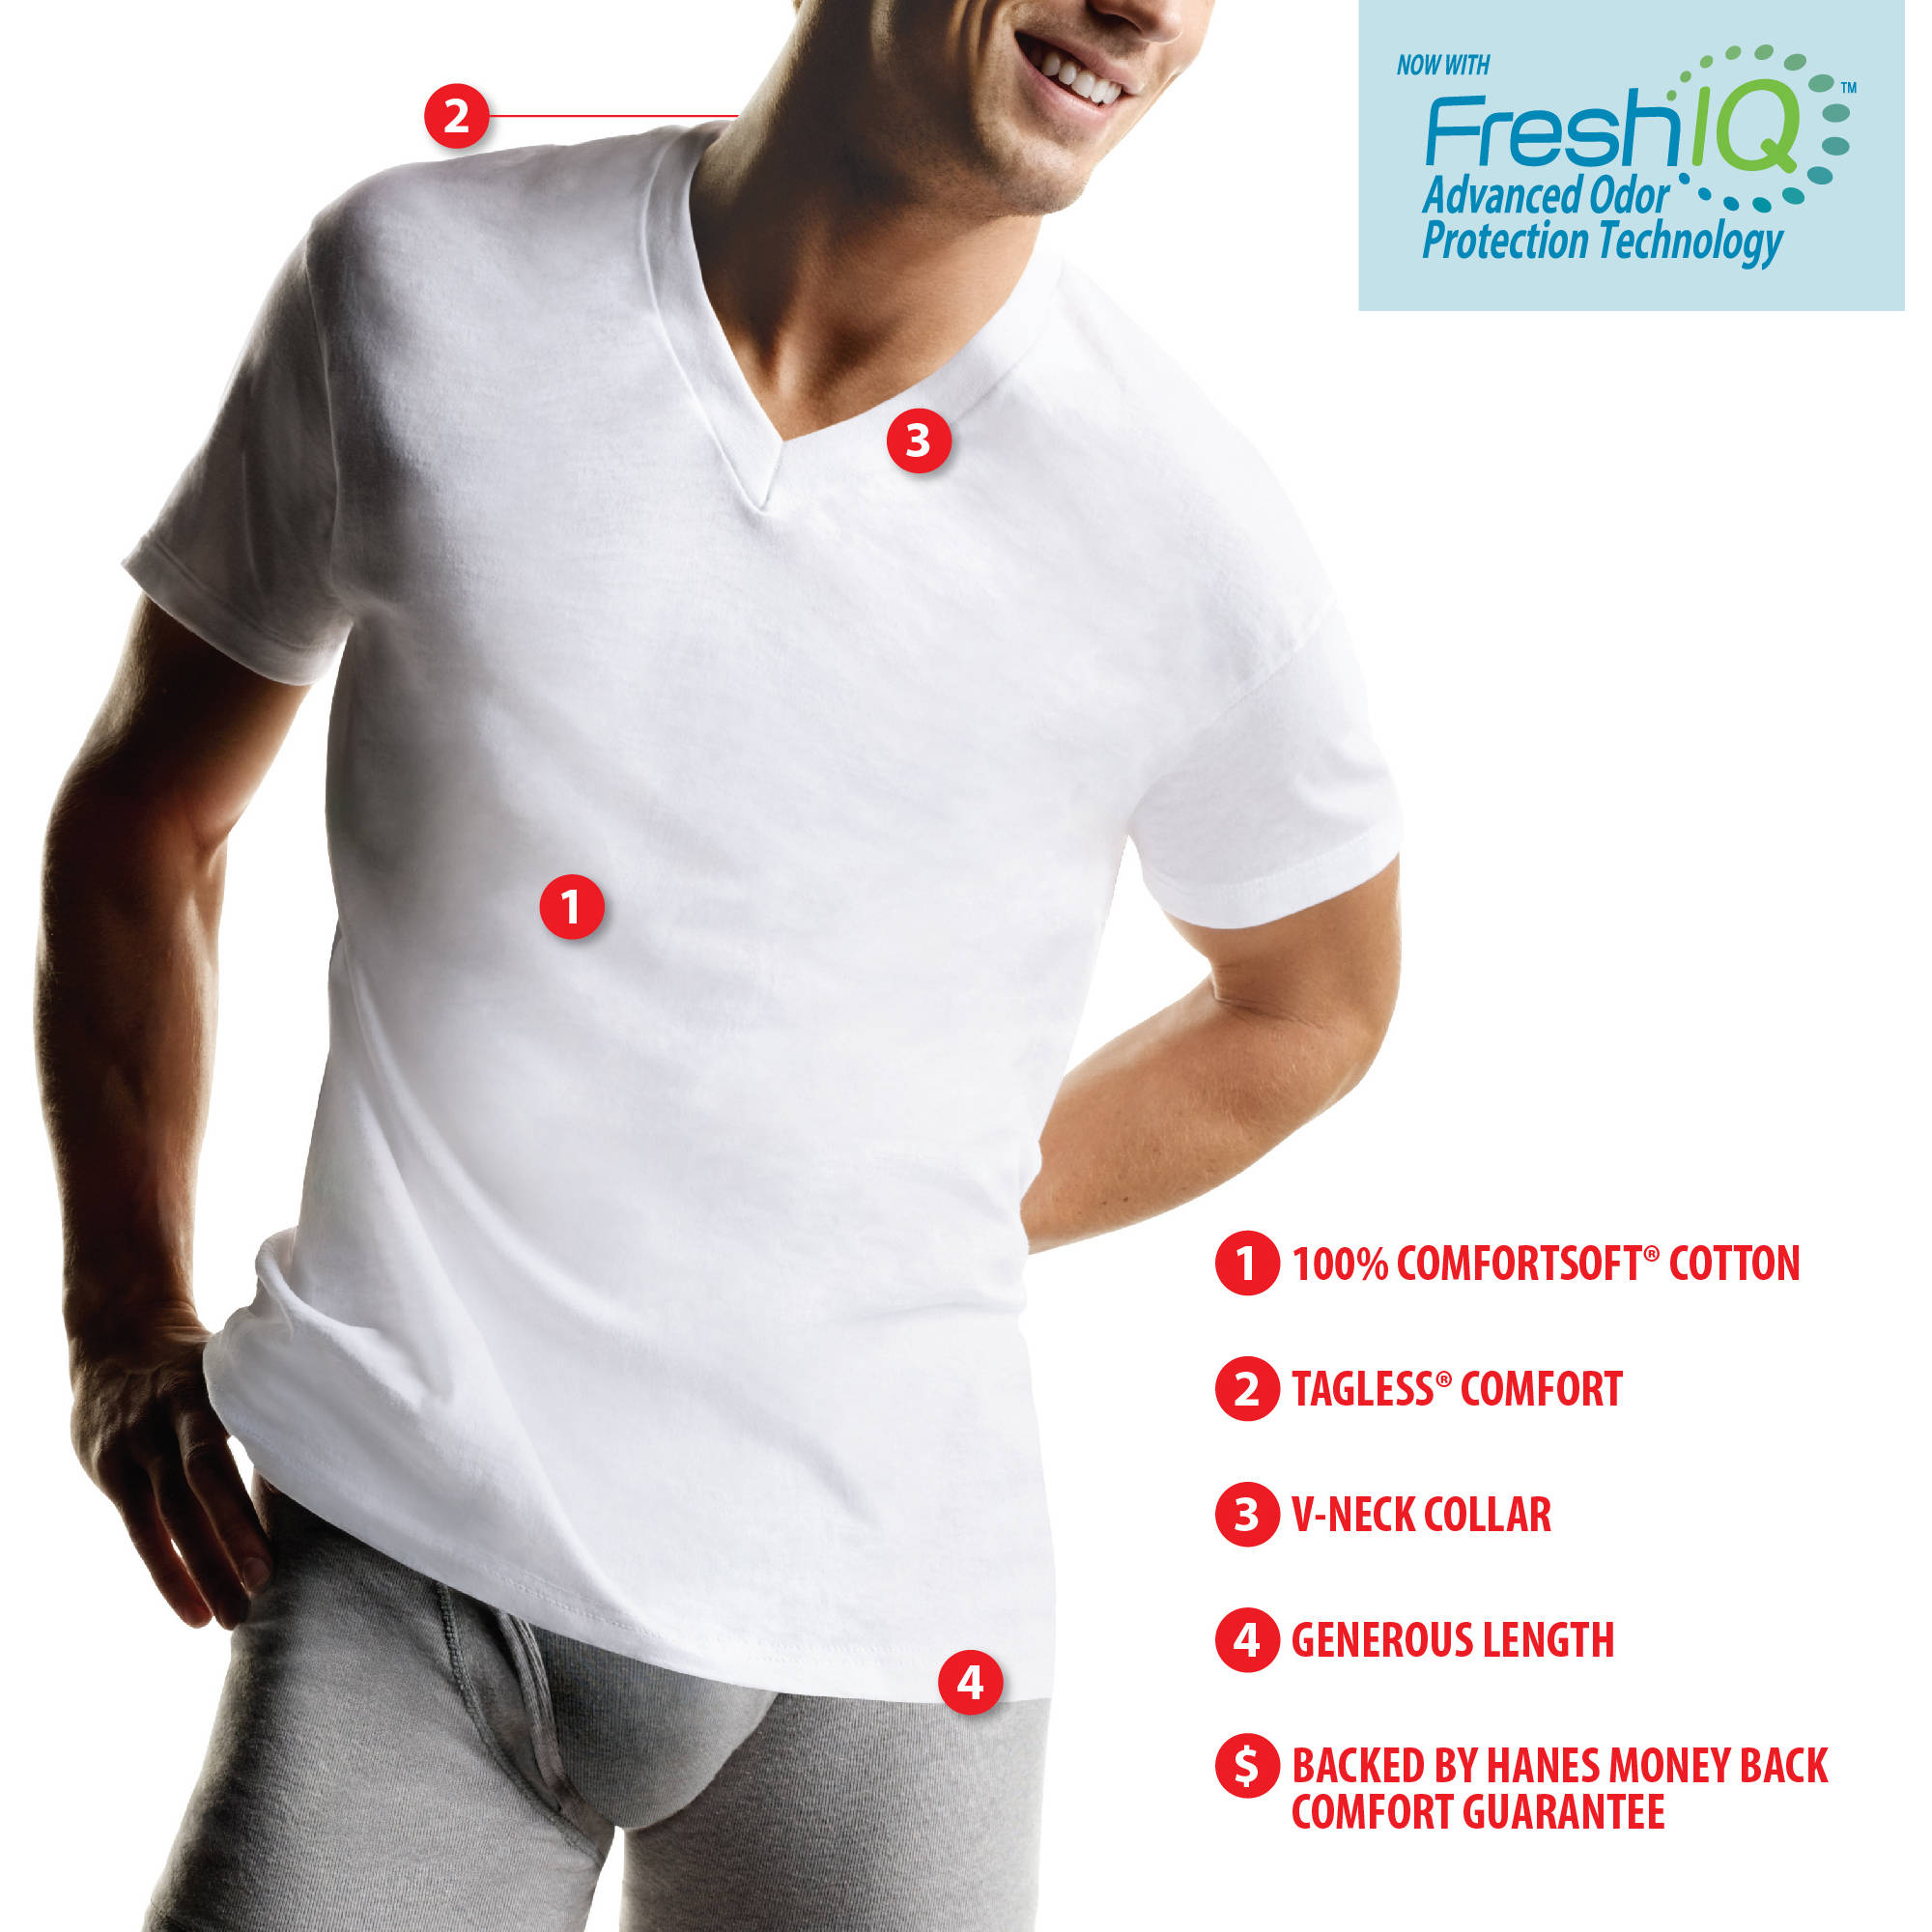 Hanes Men's Fresh IQ White V-Neck T-Shirt 6+1 Free Bonus Pack - image 3 of 6